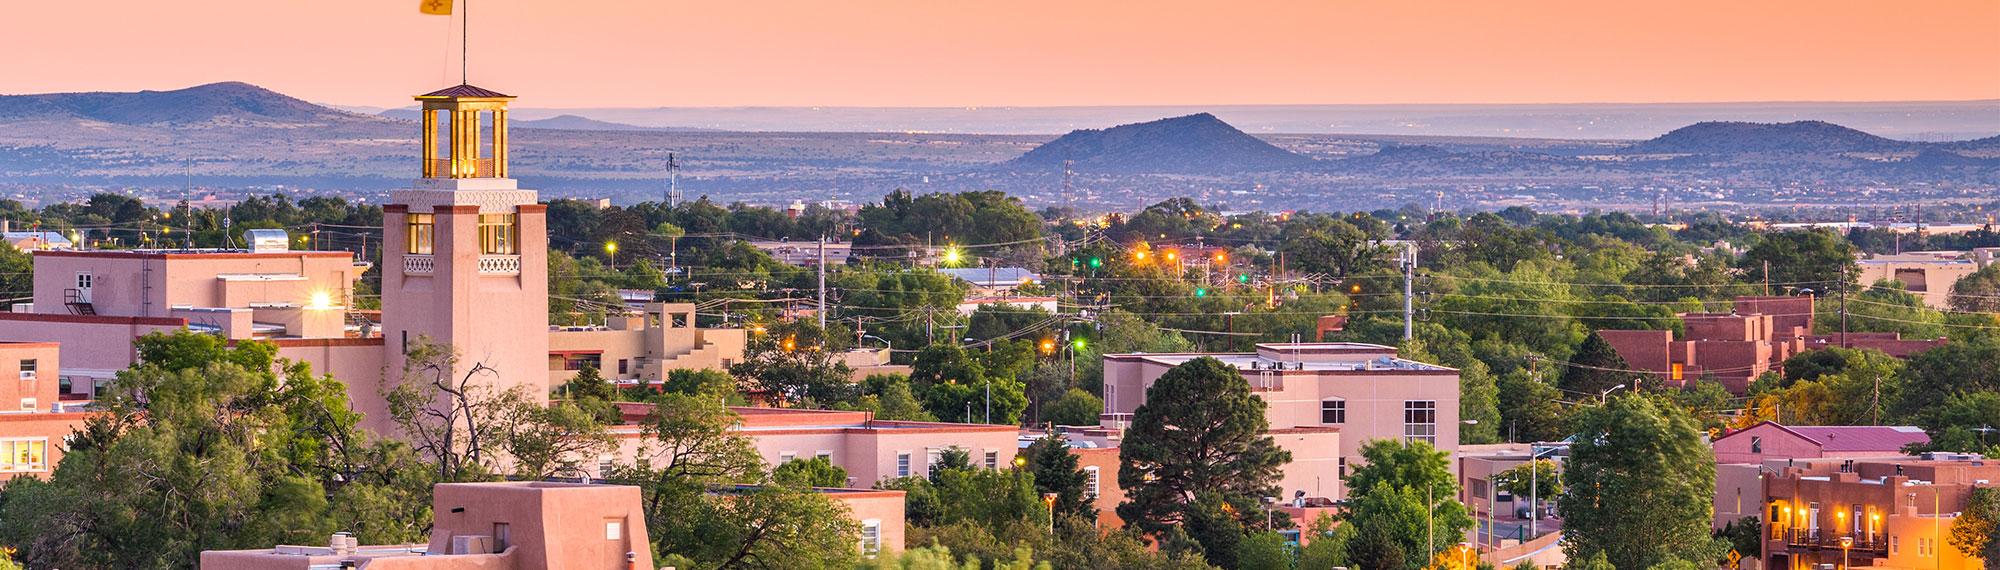 view of Santa Fe New Mexico